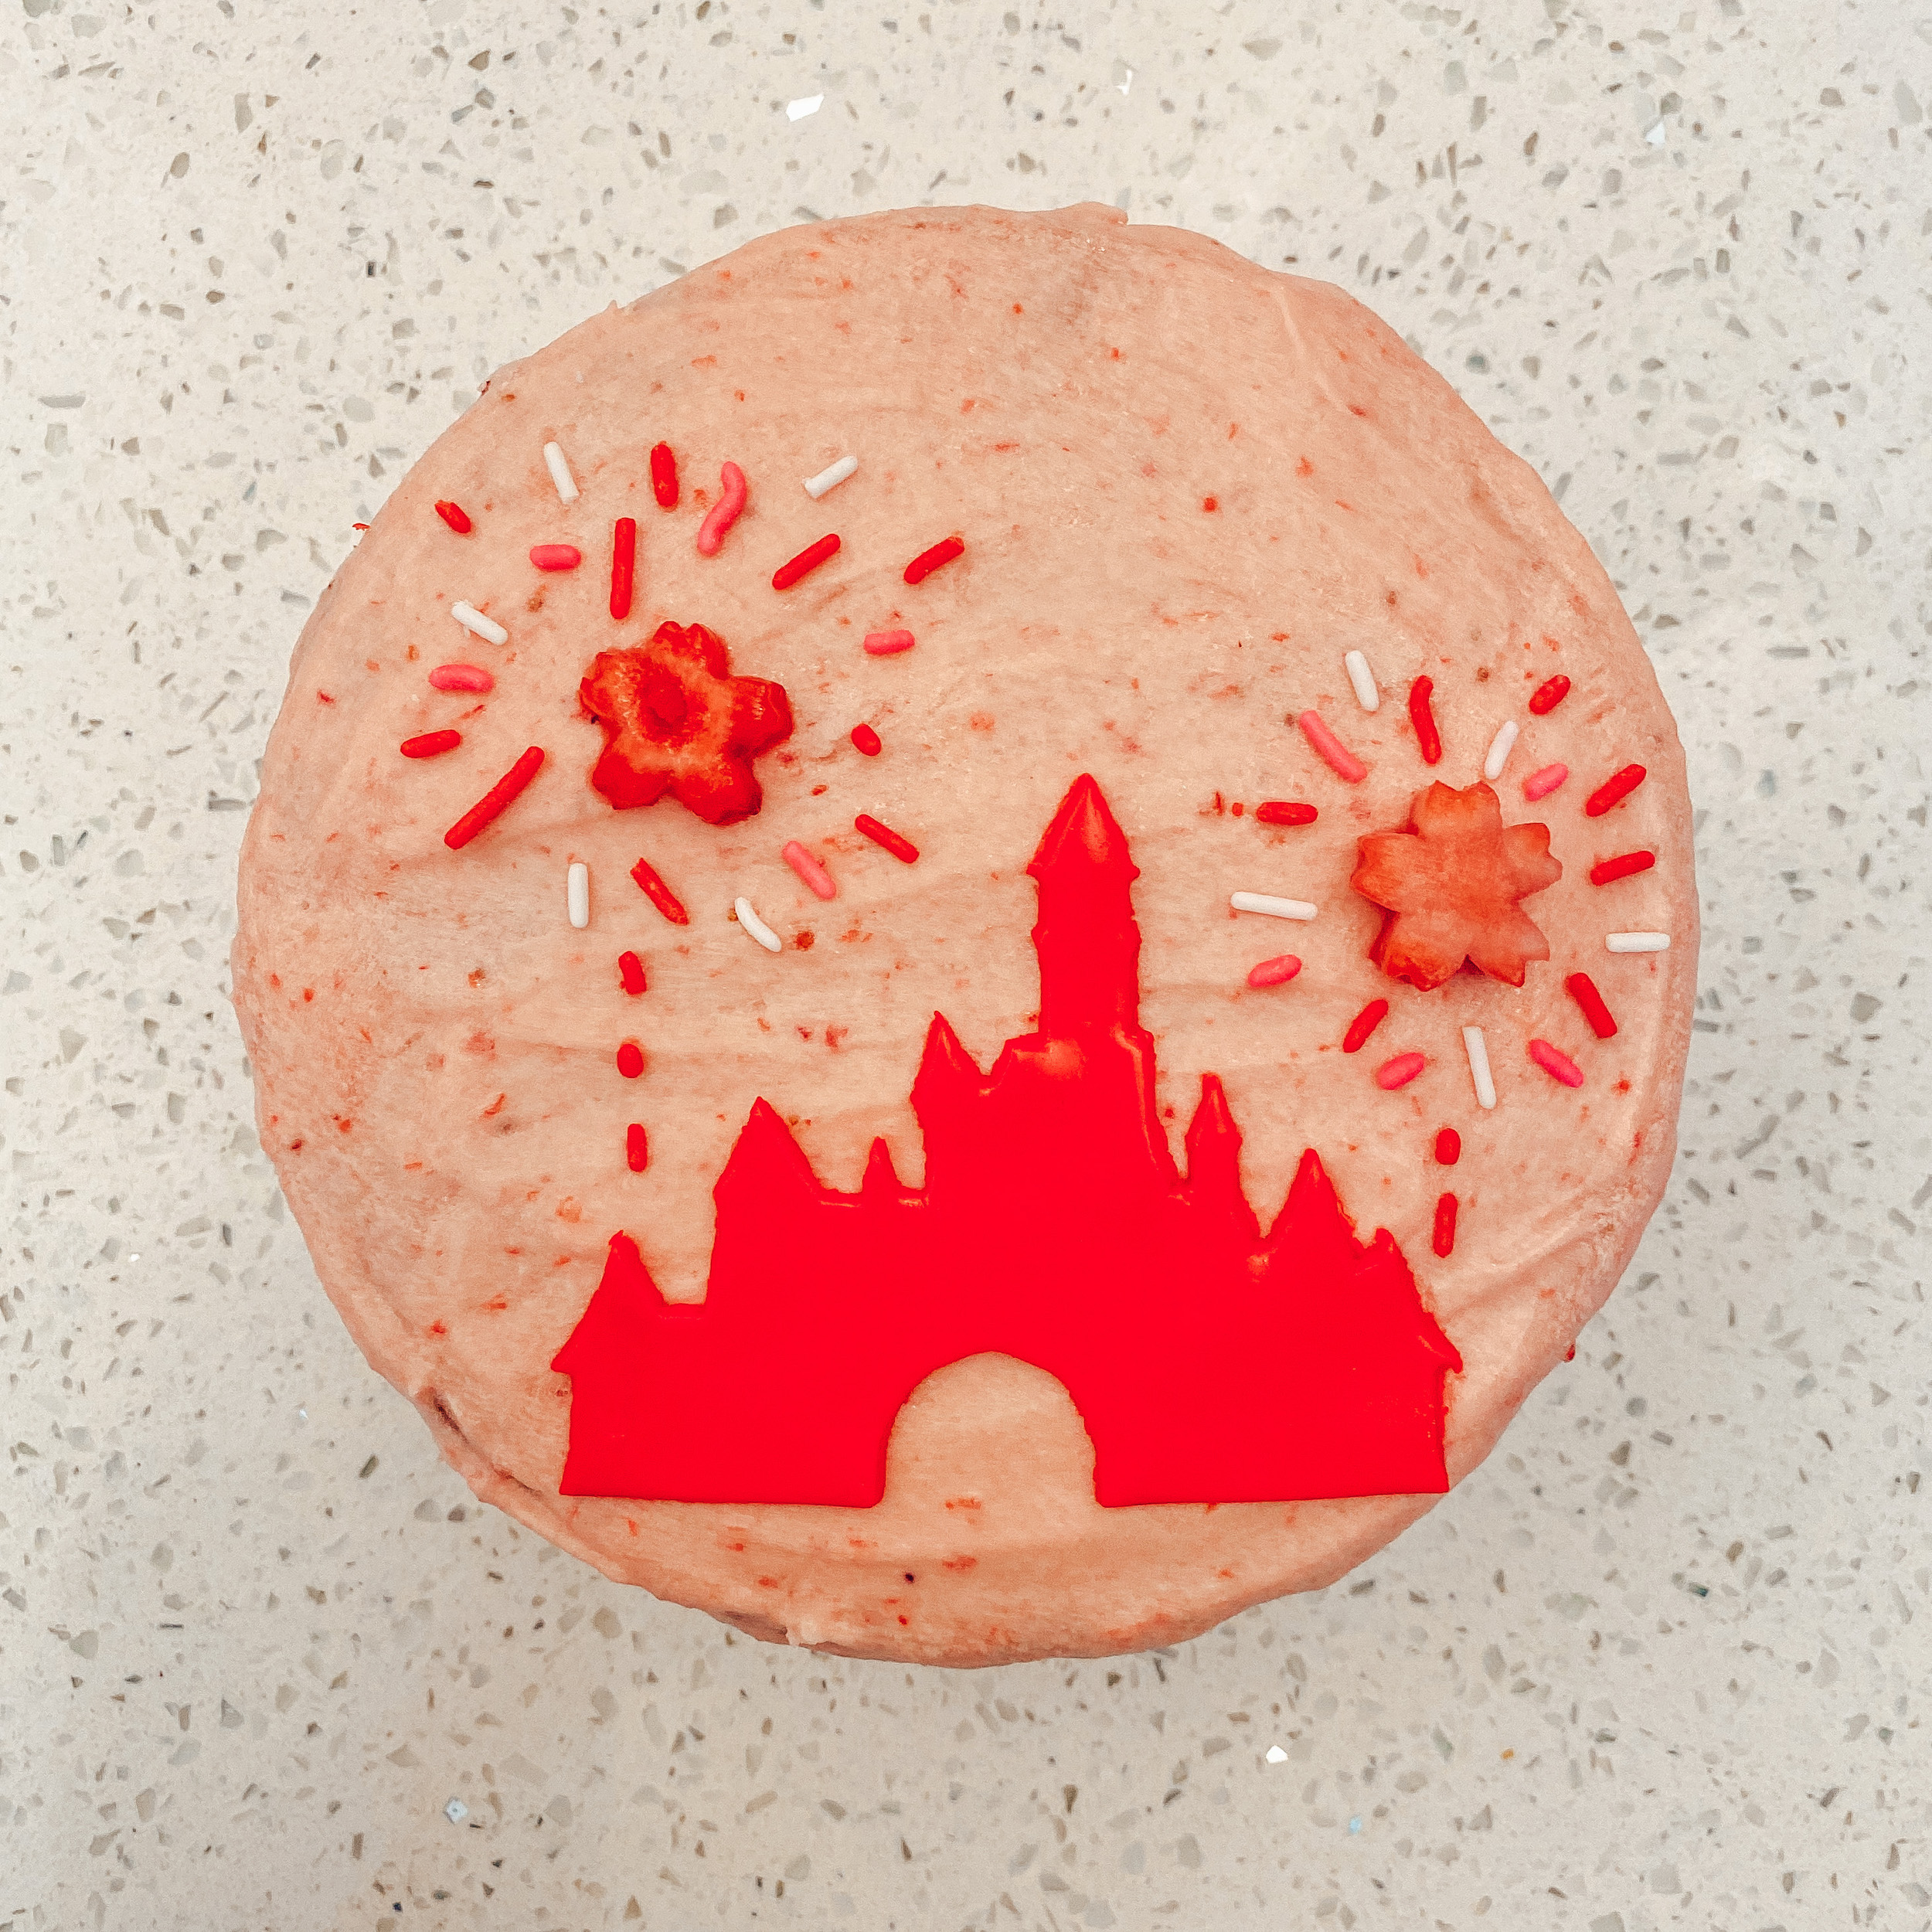 strawberry lemon cake with disneyland castle and fireworks decorations